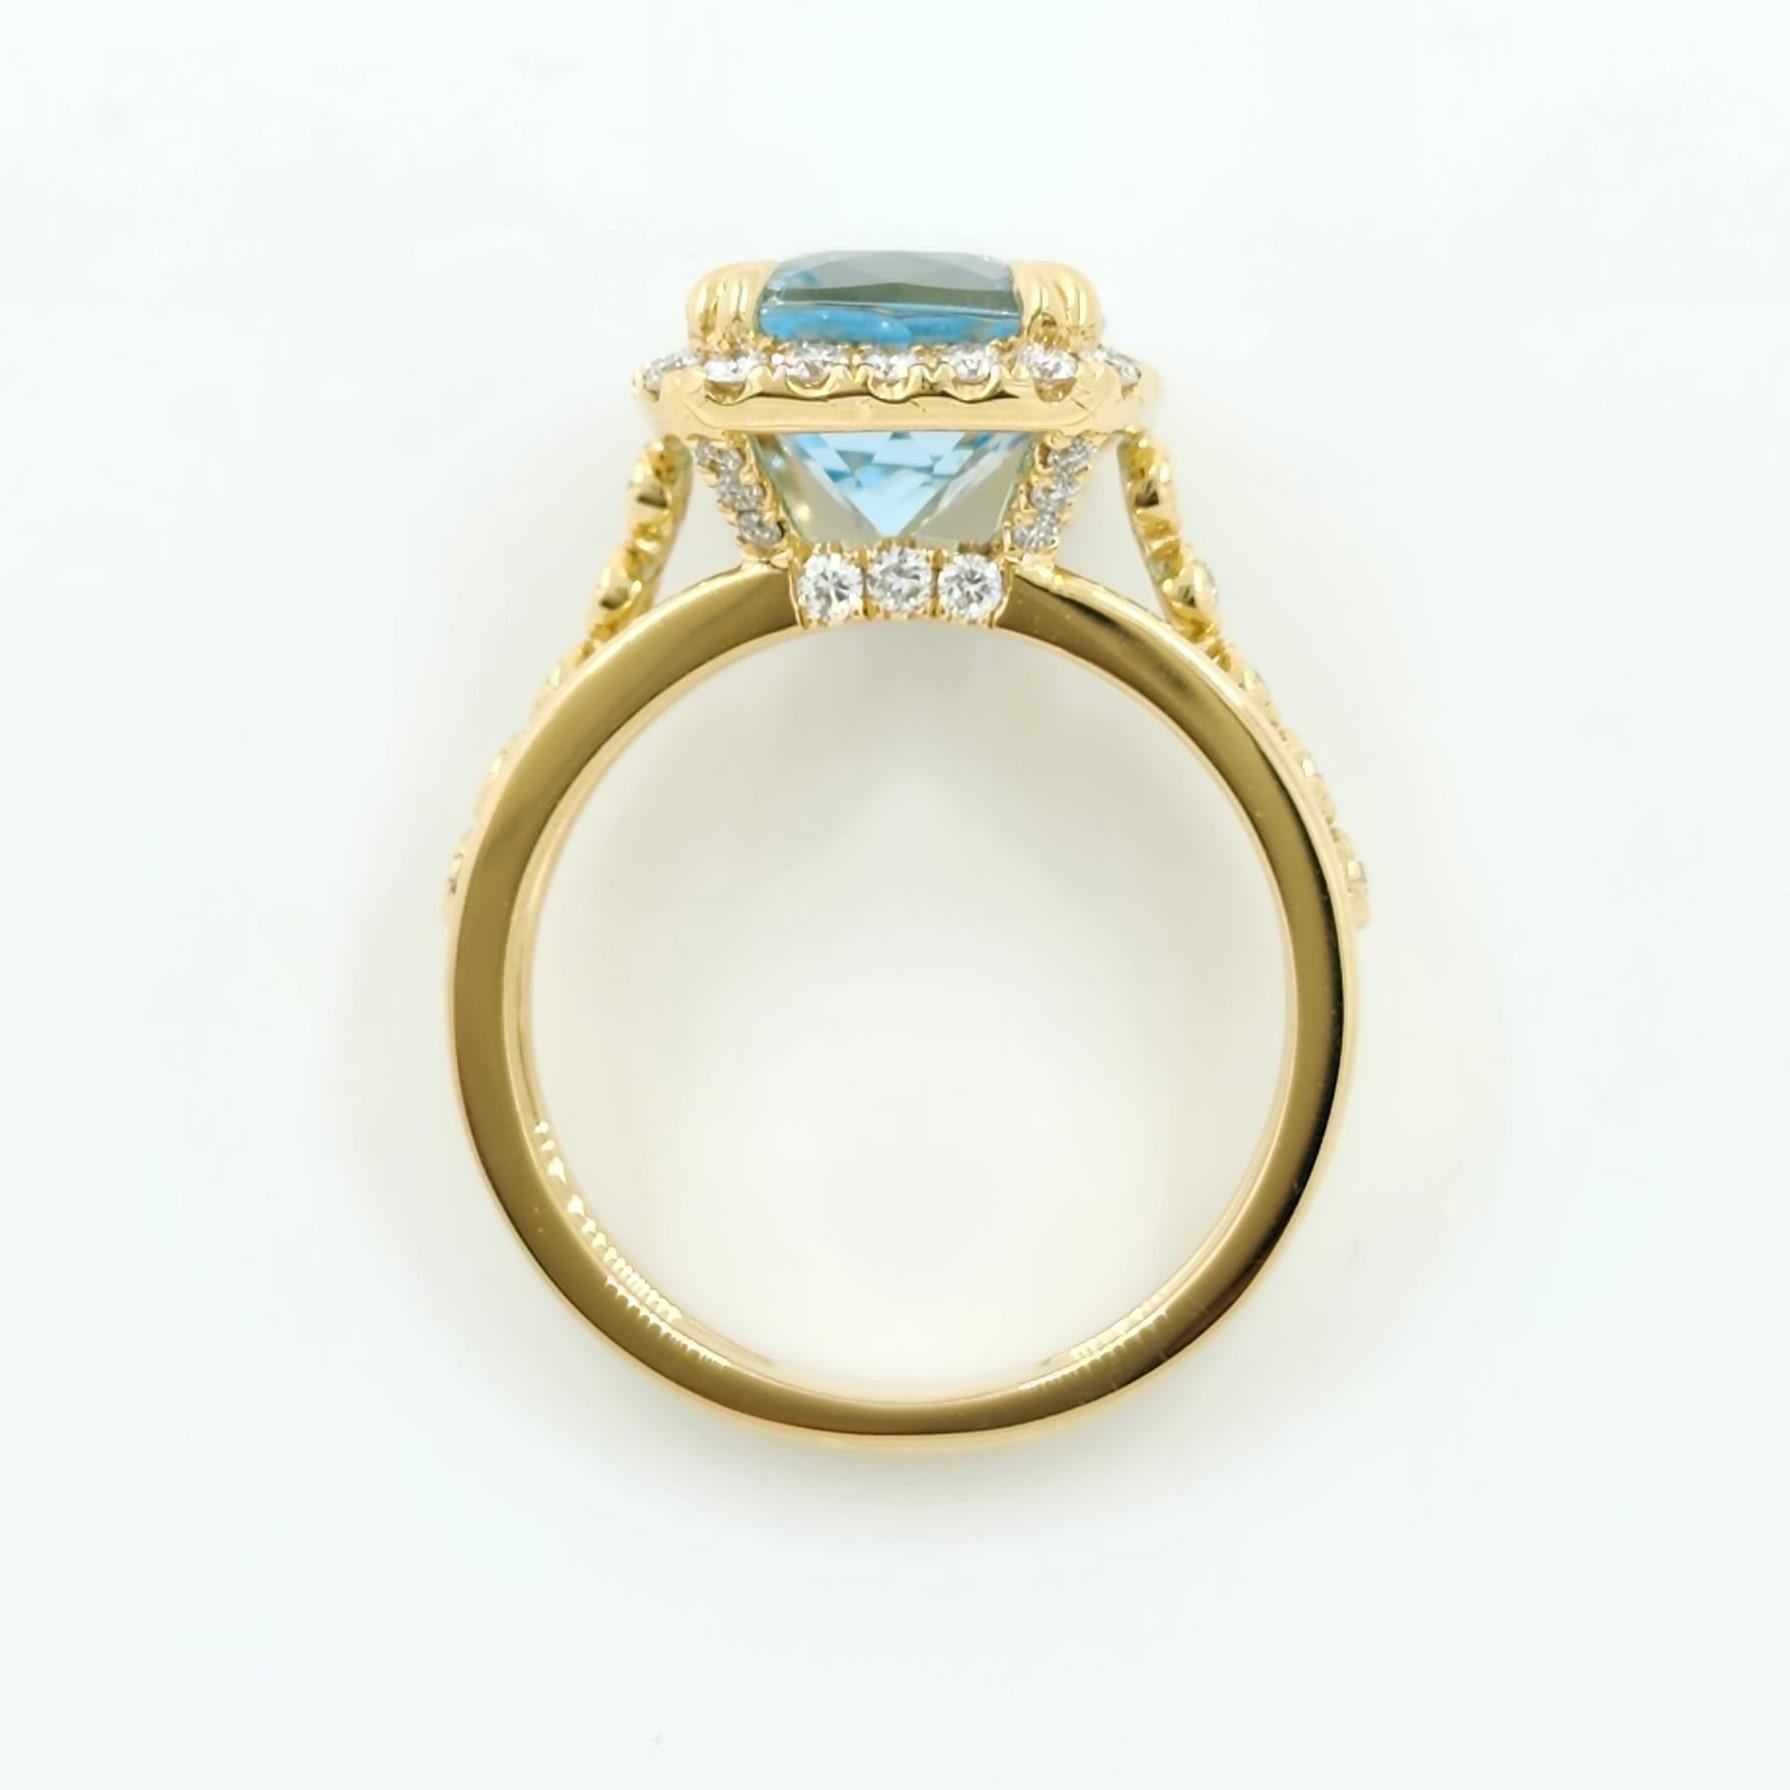 Women's 3.87 Carat Aquamarine Diamond Ring in 18 Karat Yellow Gold